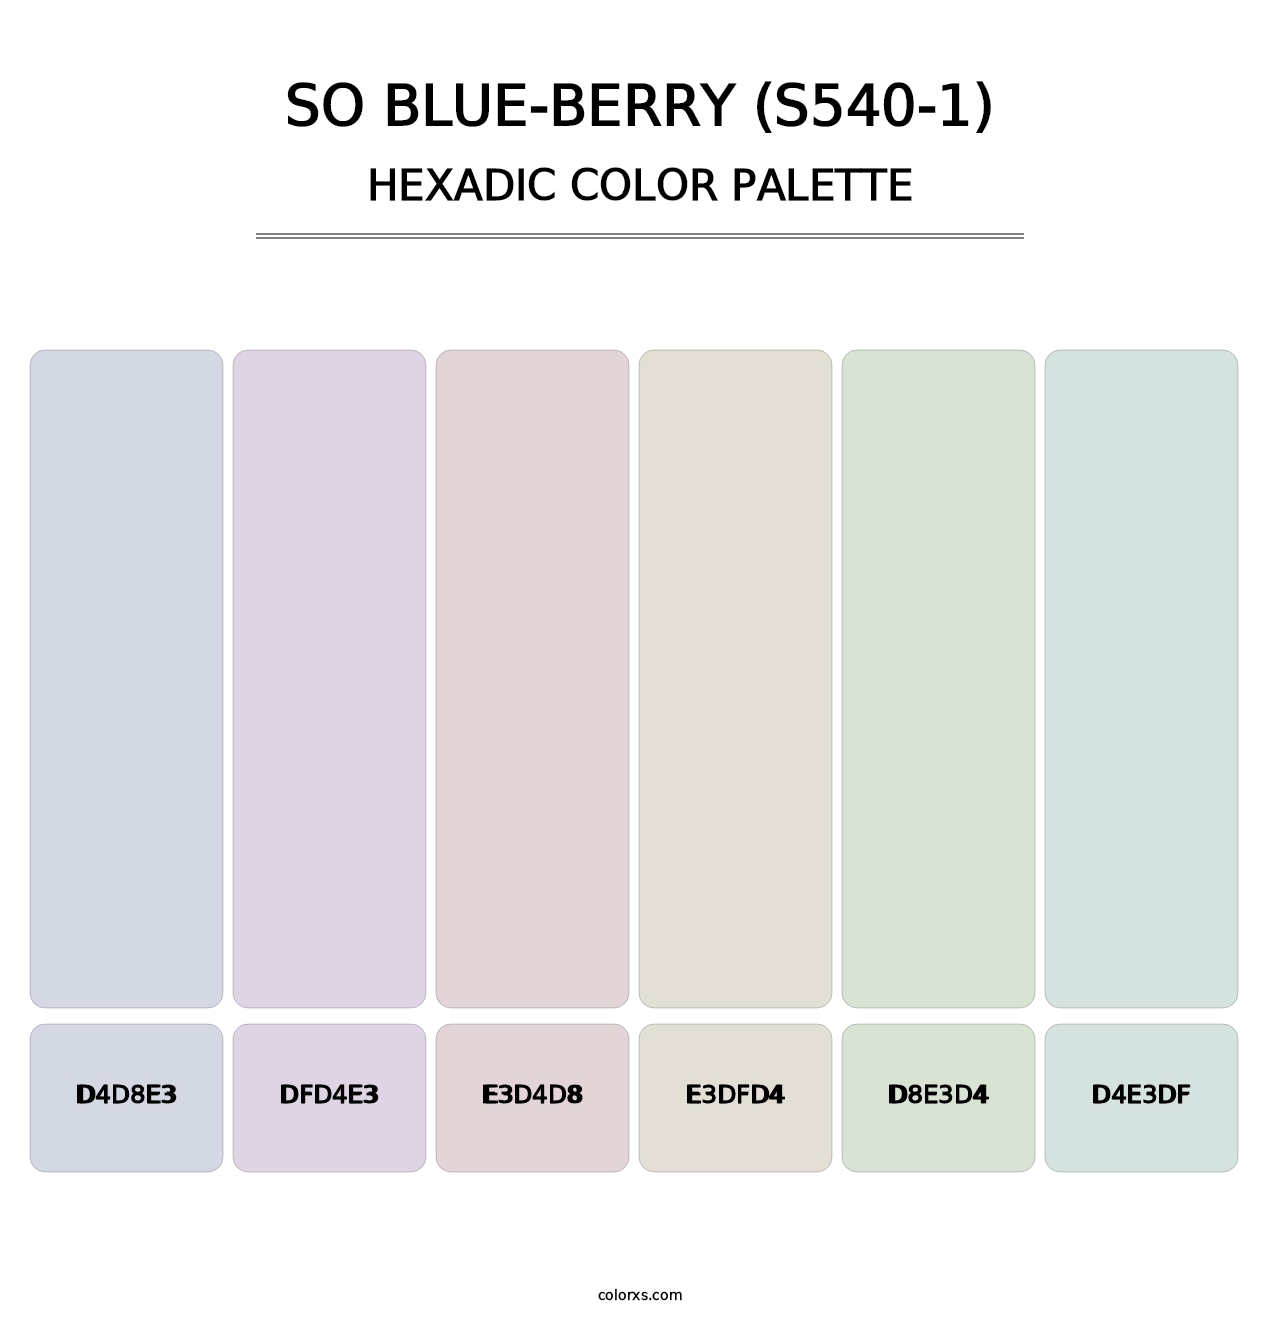 So Blue-Berry (S540-1) - Hexadic Color Palette